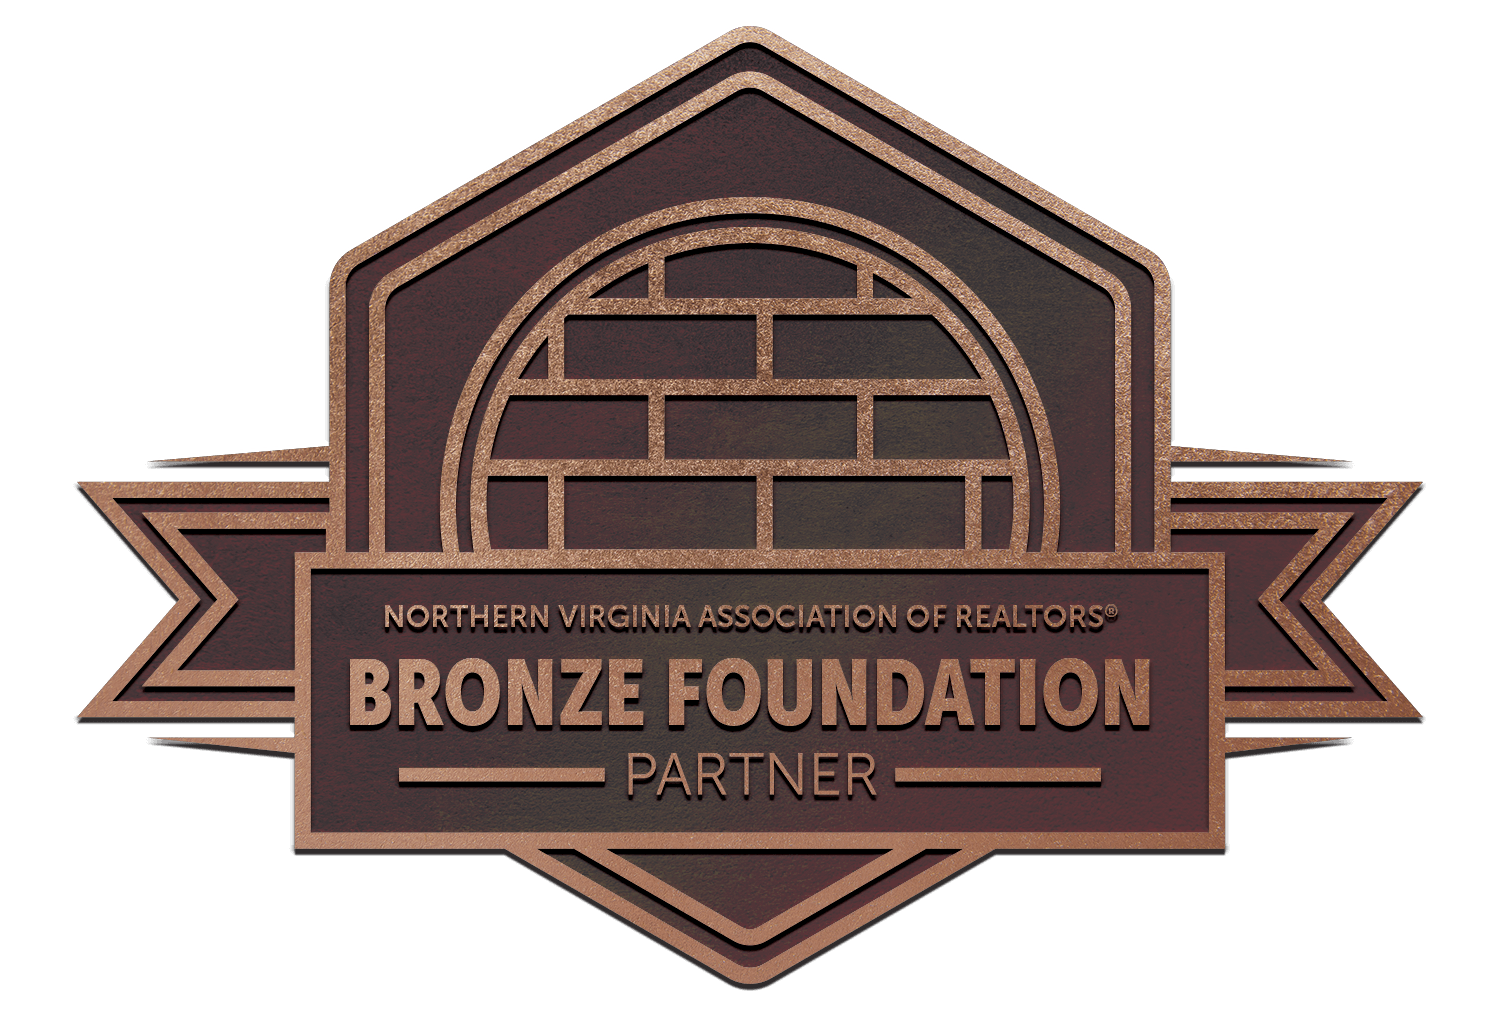 Bronze Foundation